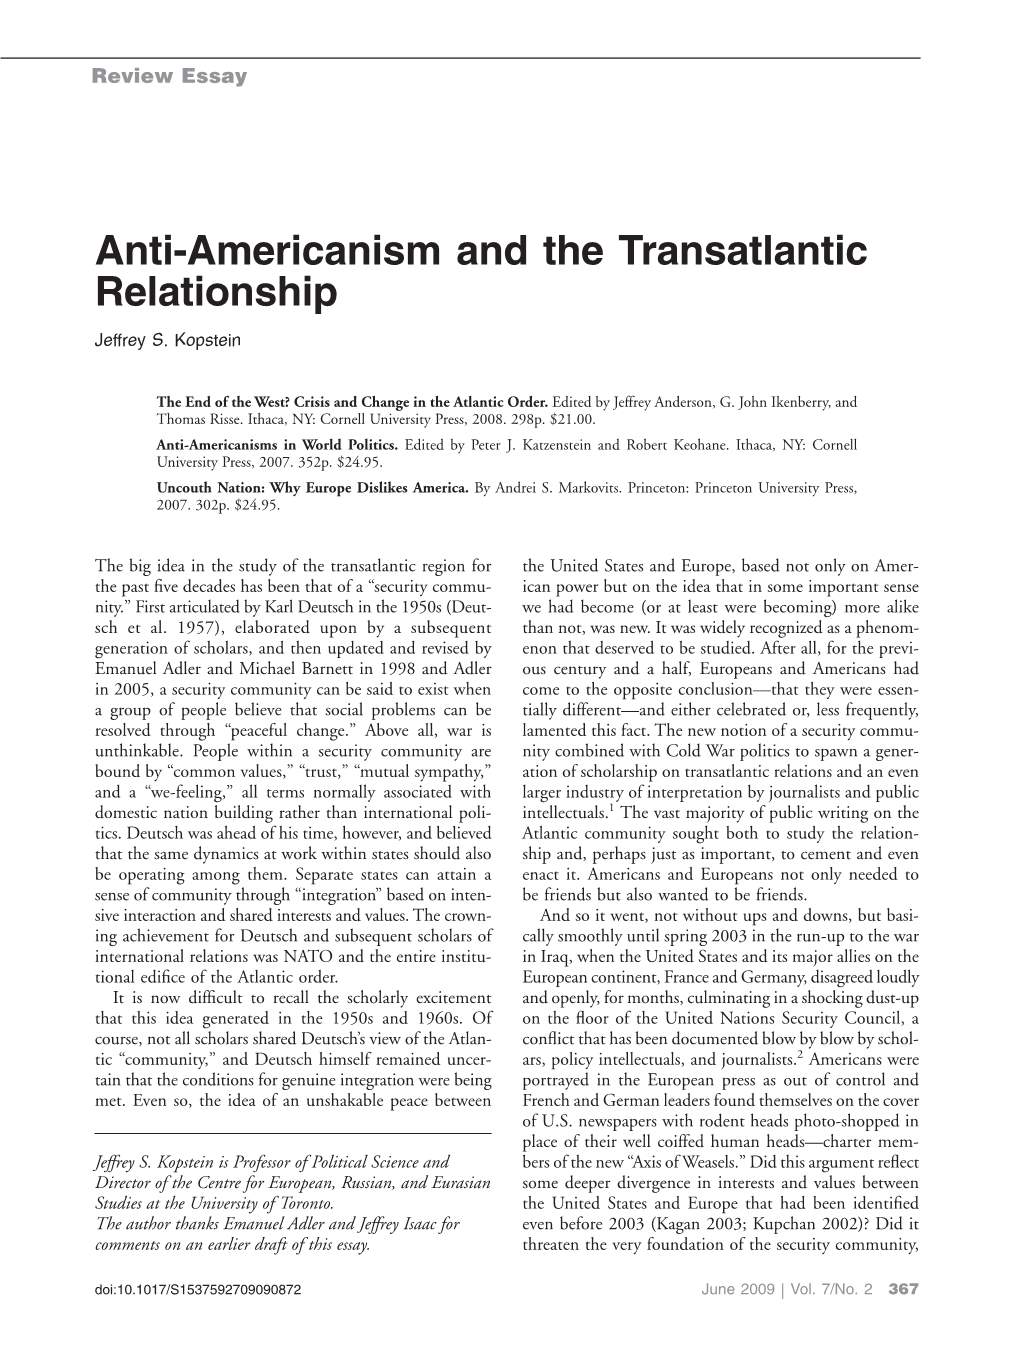 Anti-Americanism and the Transatlantic Relationship